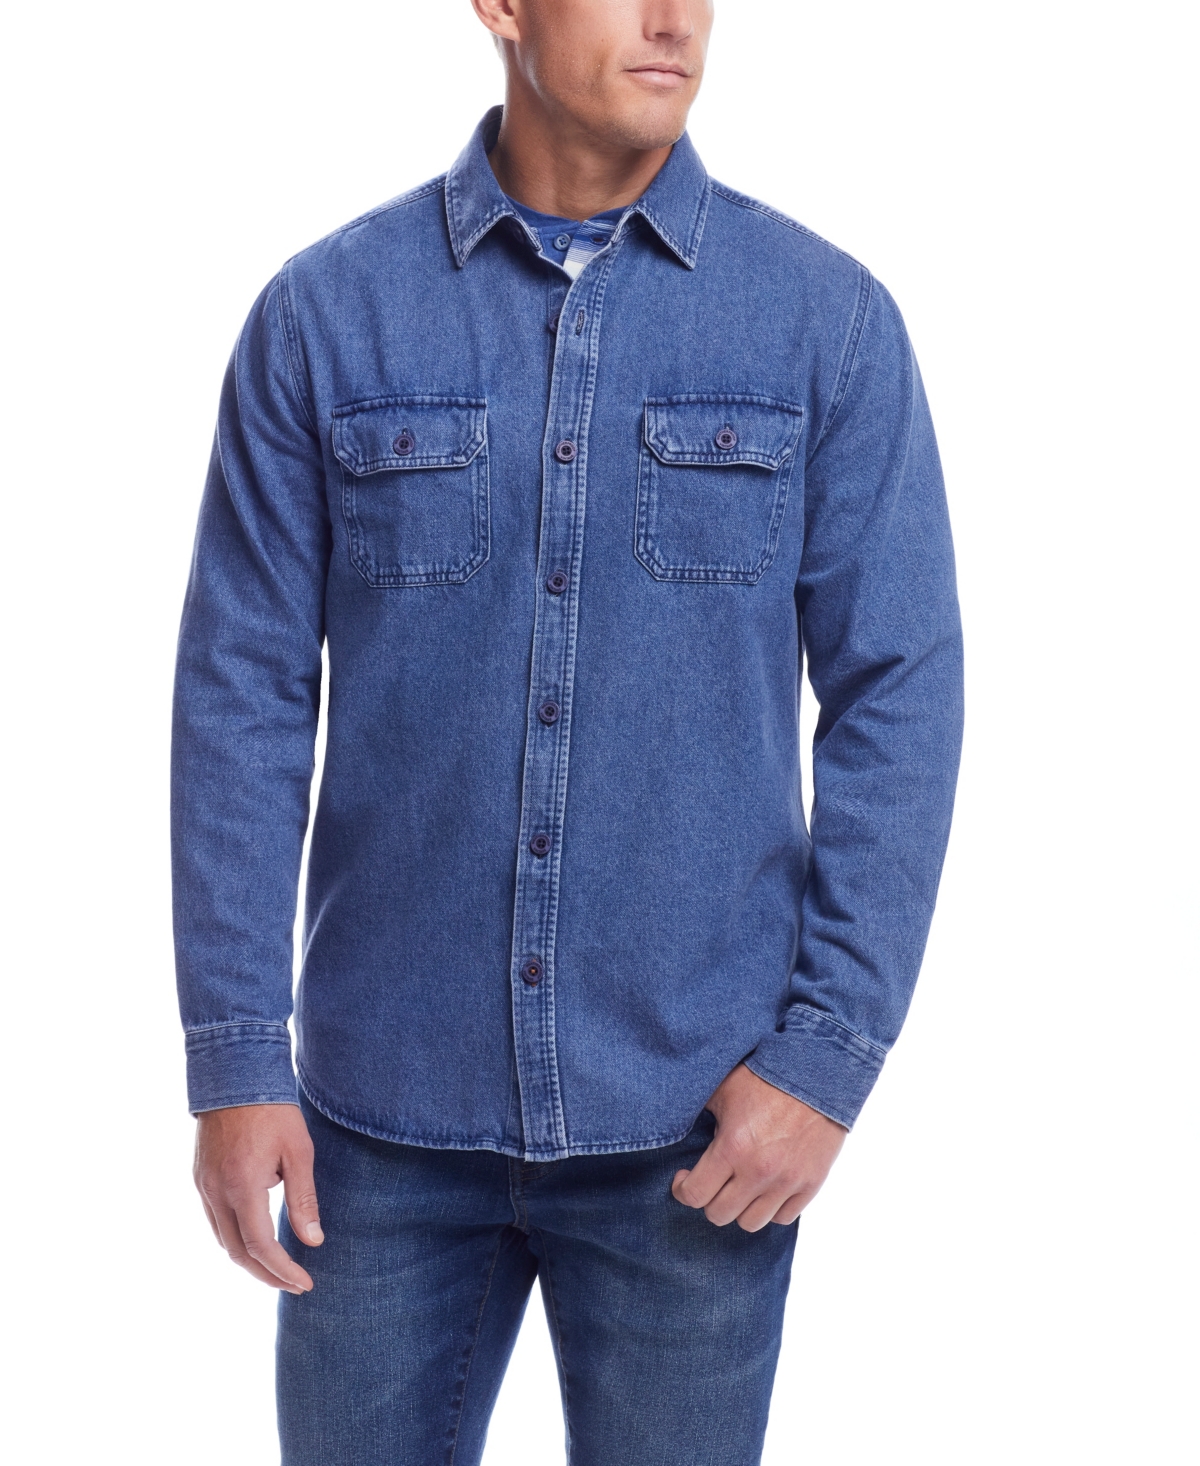 Men's Denim Overshirt Jacket - Acid Blue